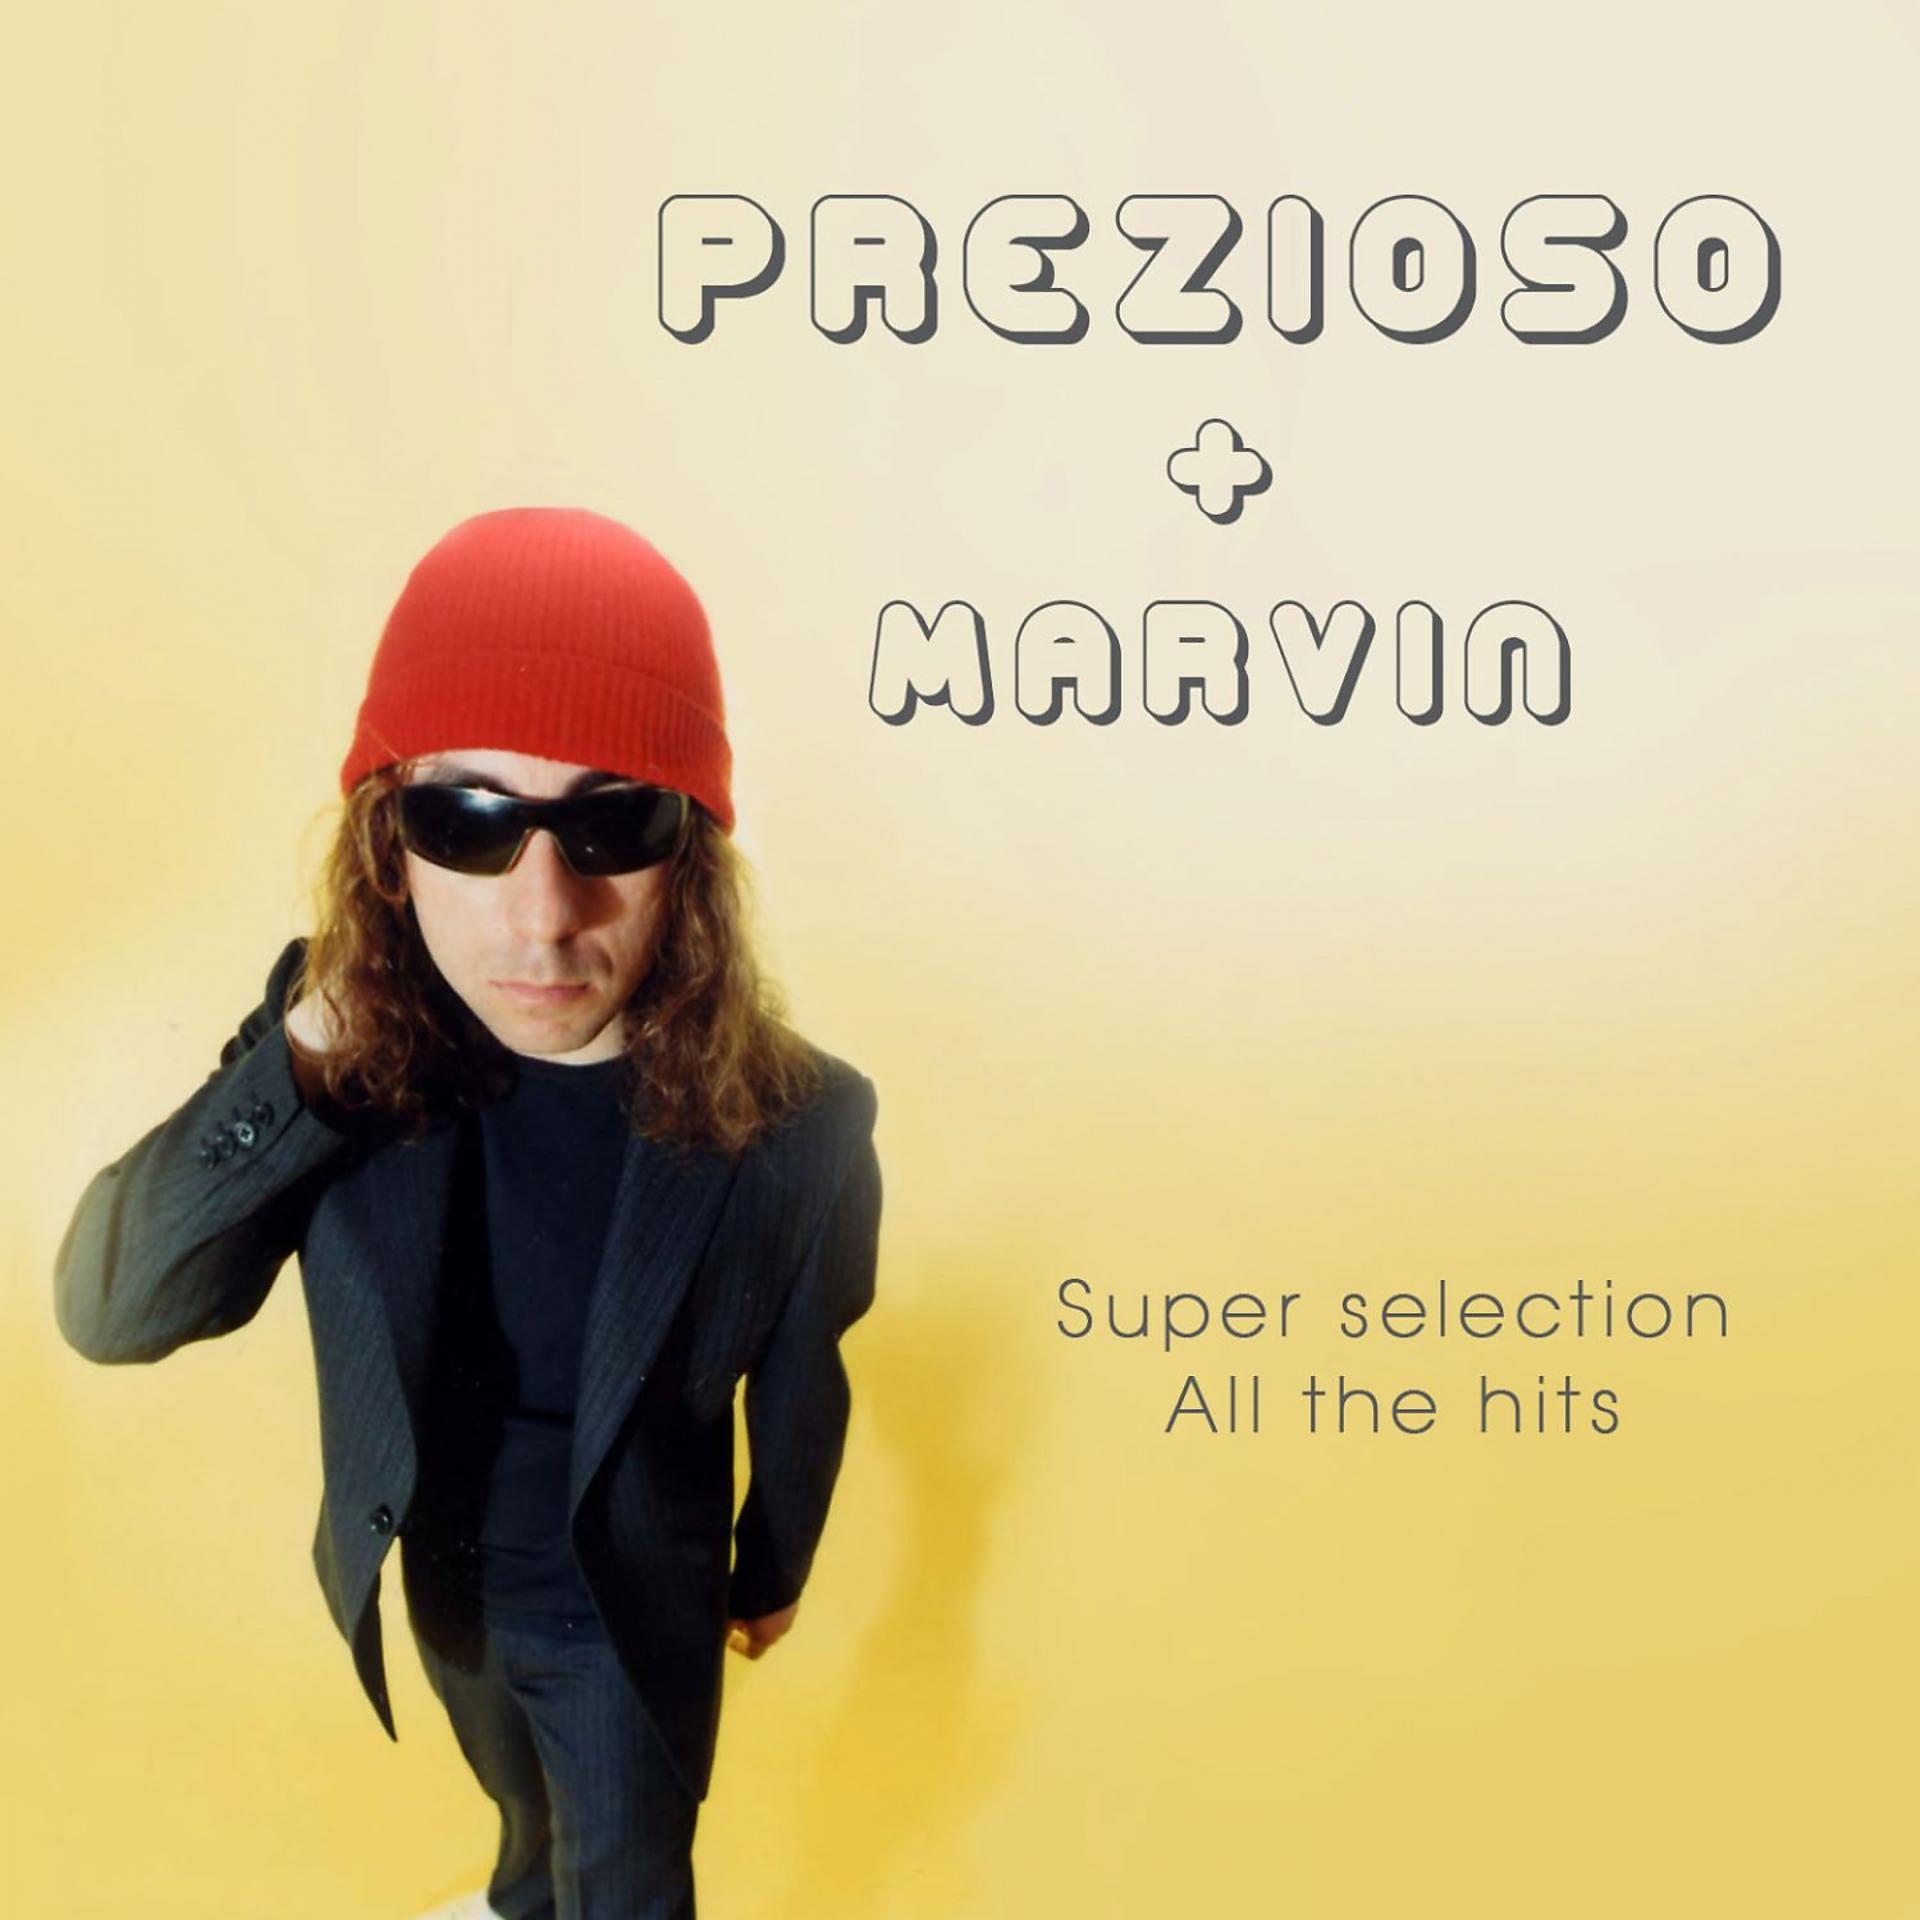 Постер к треку Prezioso, Andrea prezioso, Prezioso, Andrea Prezioso, Marvin - Let's Talk About a Man (Extended Version)